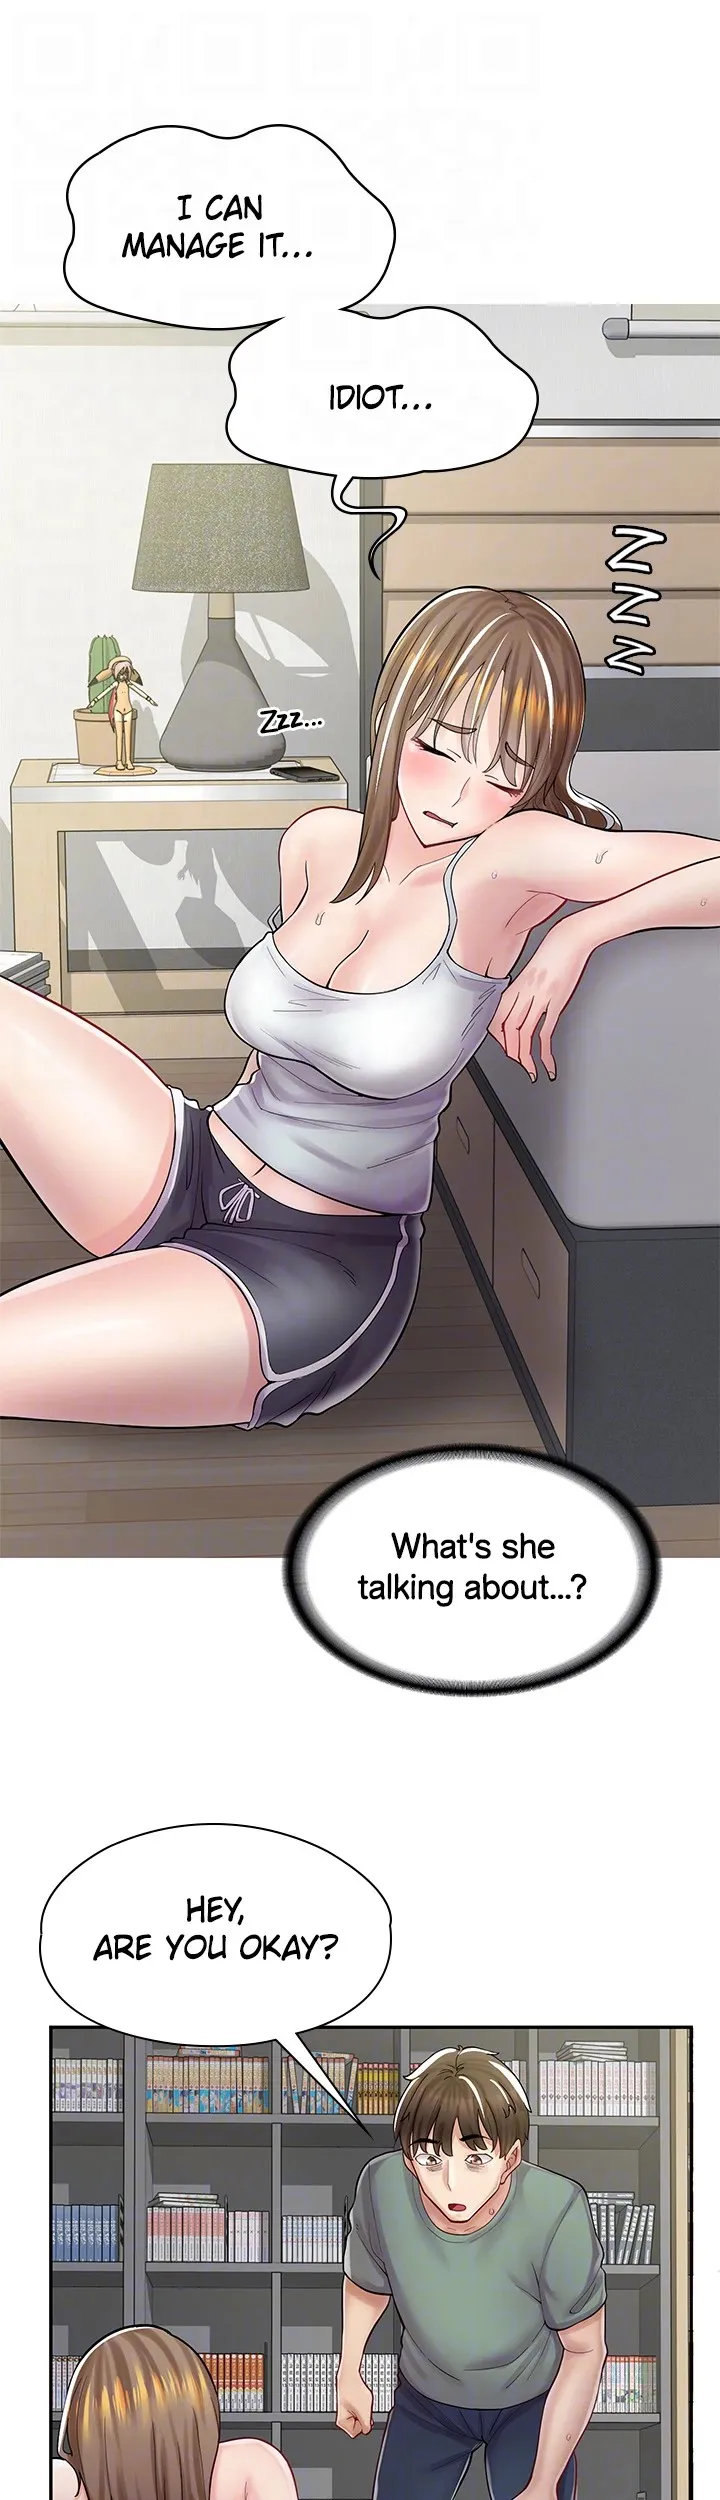 Erotic Manga Café Girls - Chapter 6 Page 18